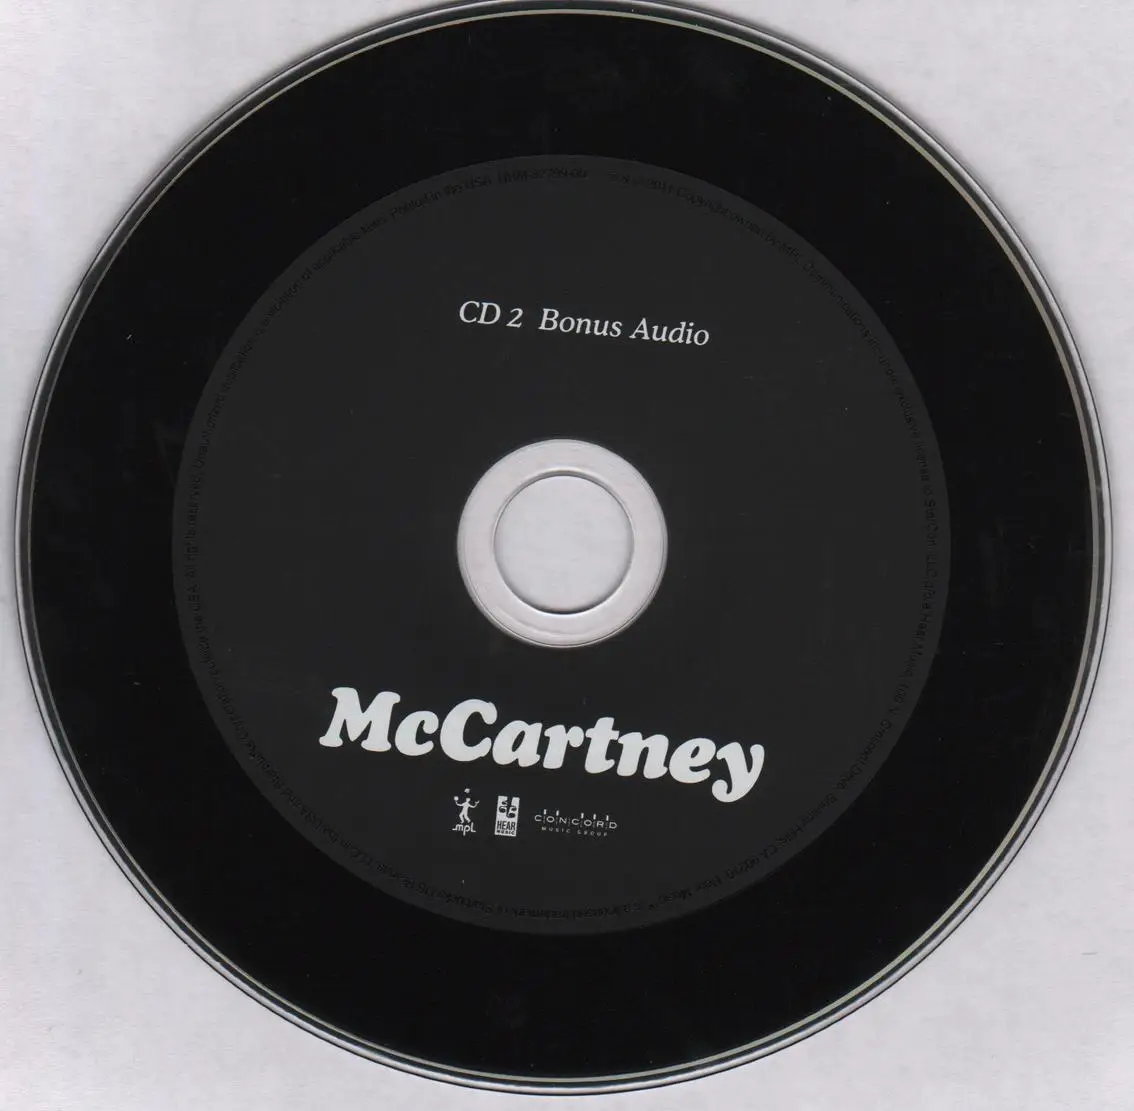 Мп3 paul. Paul MCCARTNEY 1980. Paul MCCARTNEY collection 1970г. CD диск Paul MCCARTNEY. Диск MCCARTNEY 1 обложка.